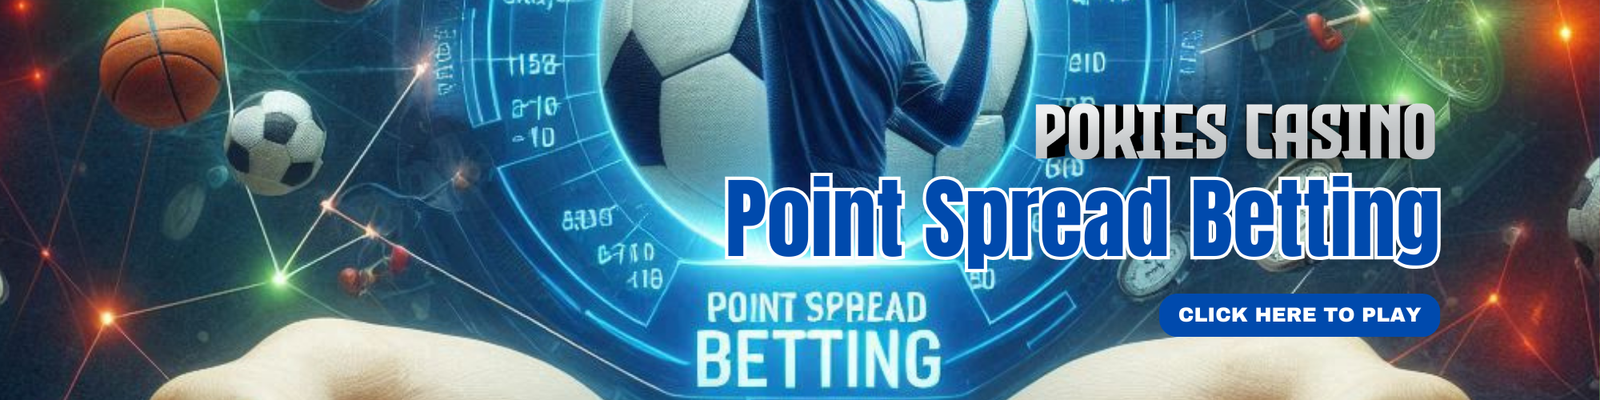 Point Spread Betting in PokiesCasino